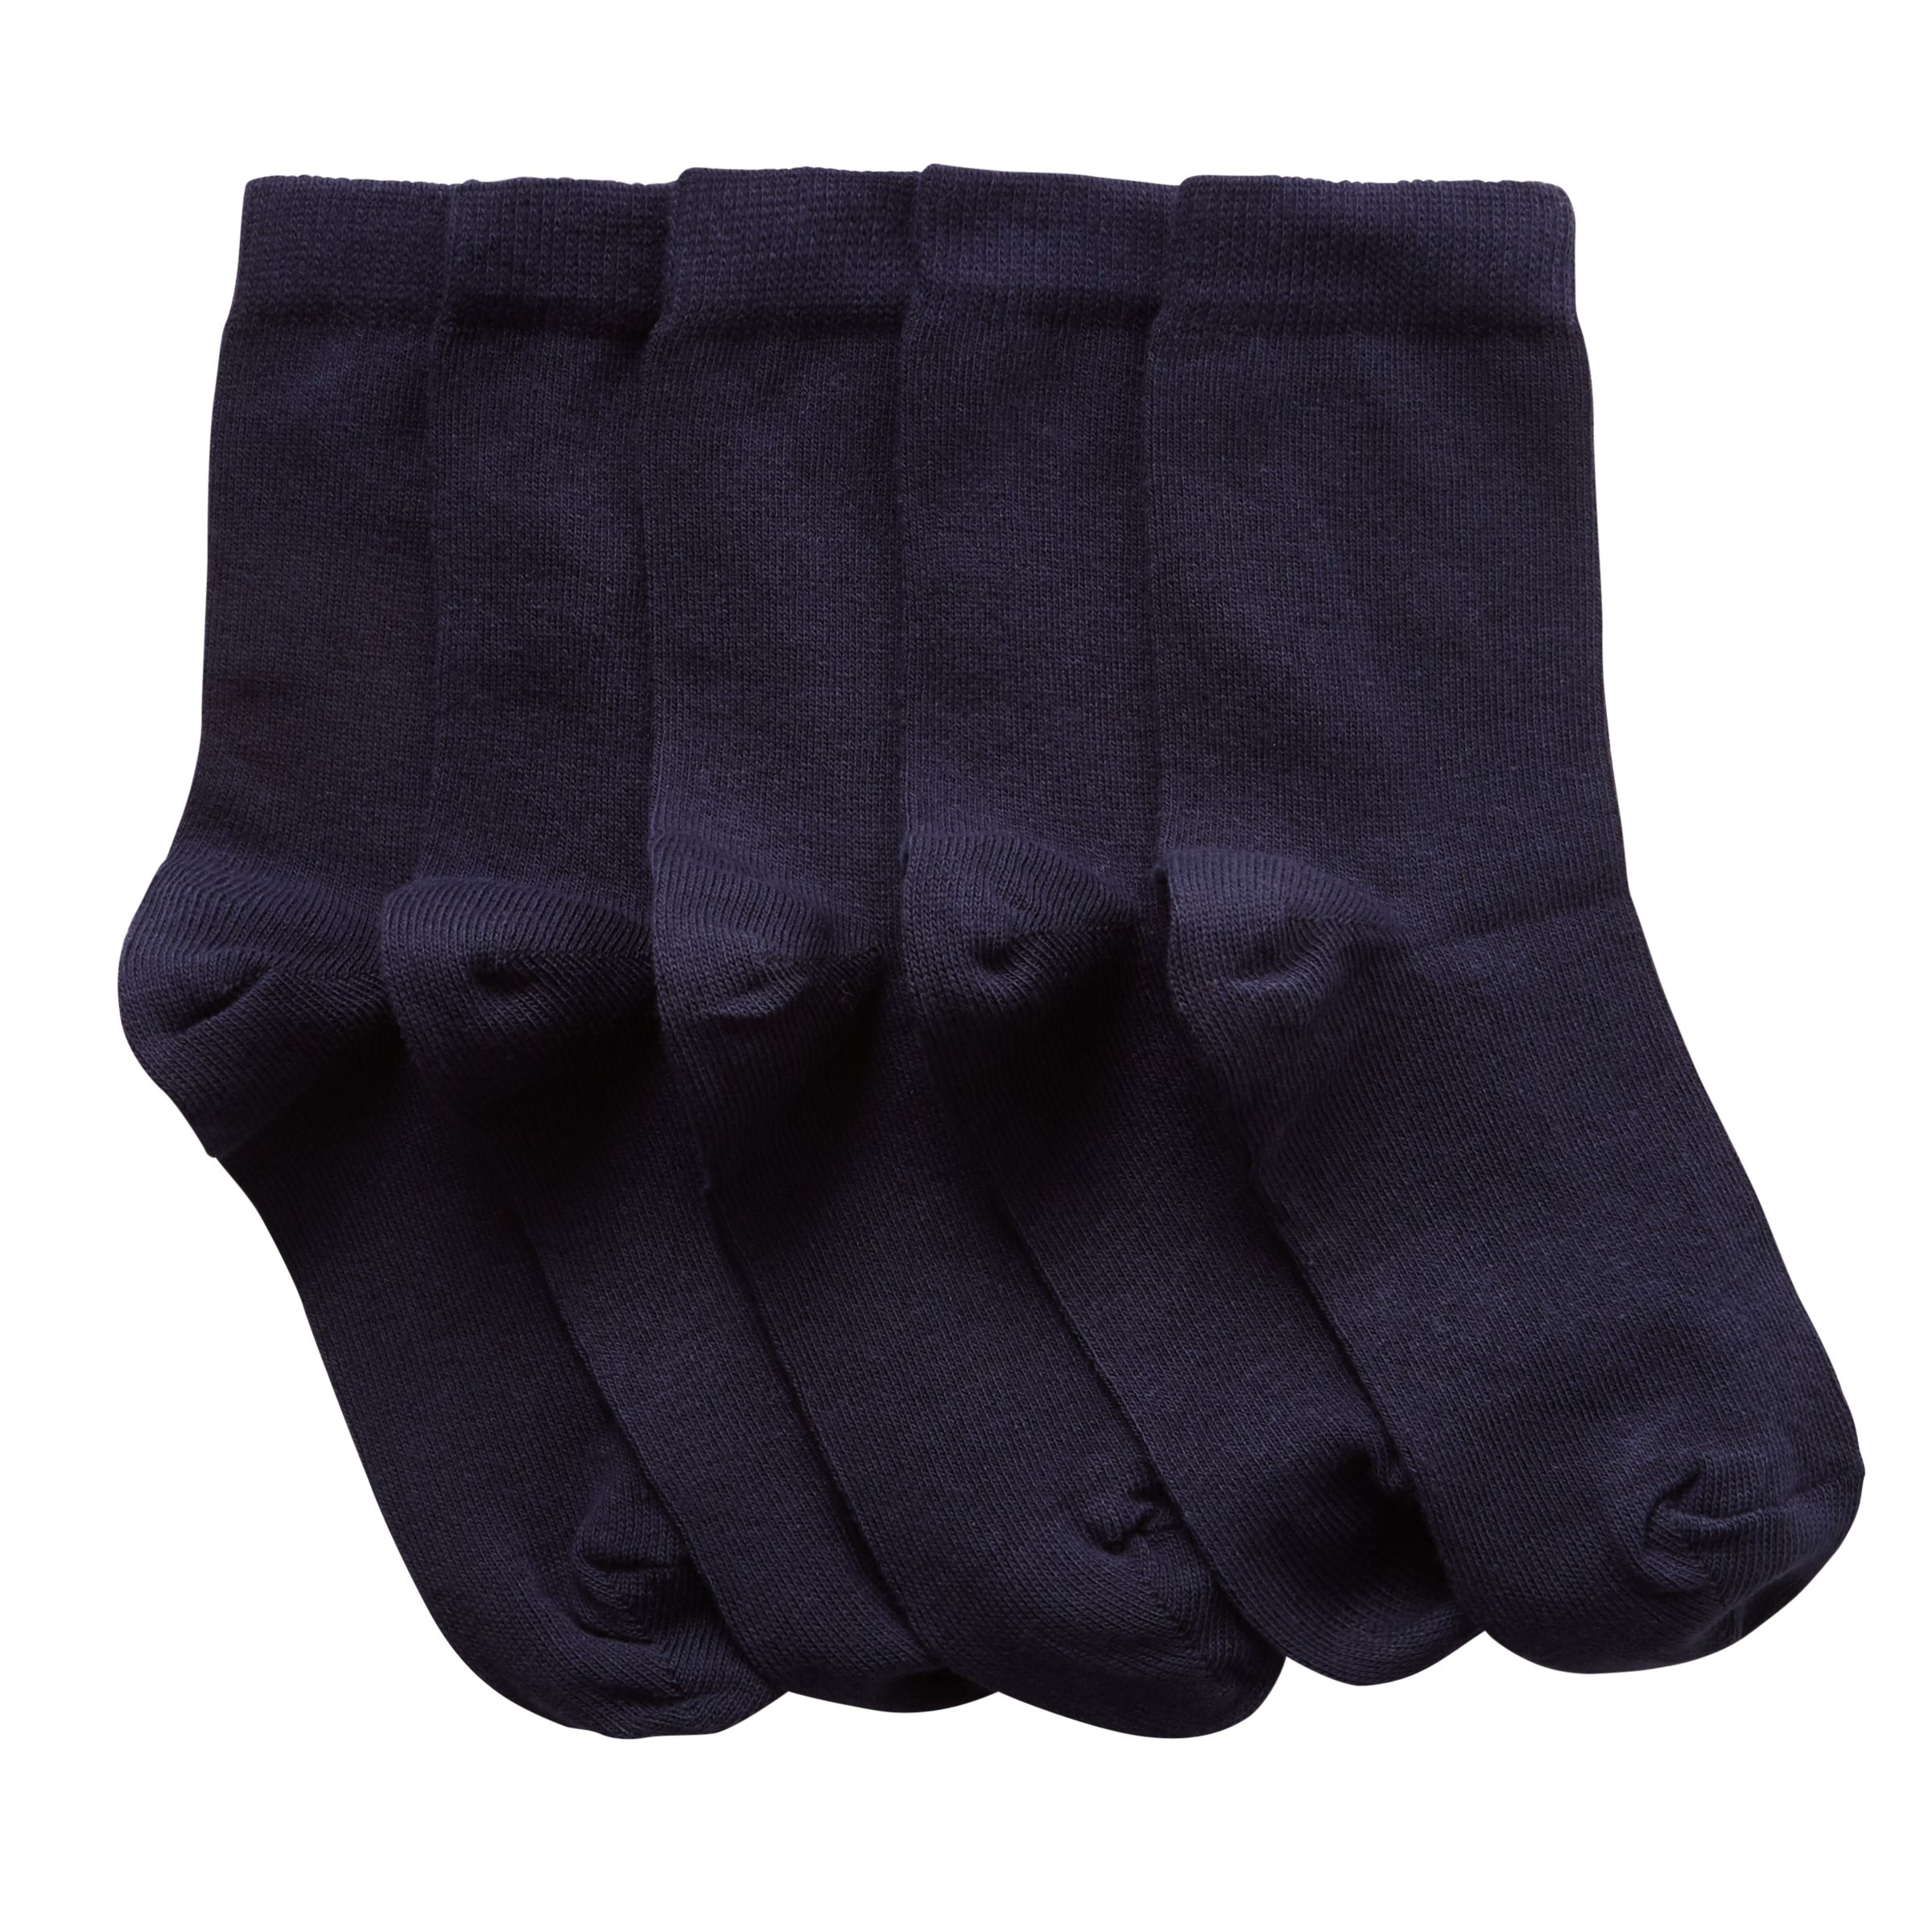 John Lewis & Partners Children's Cotton Rich Socks, Pack of 5